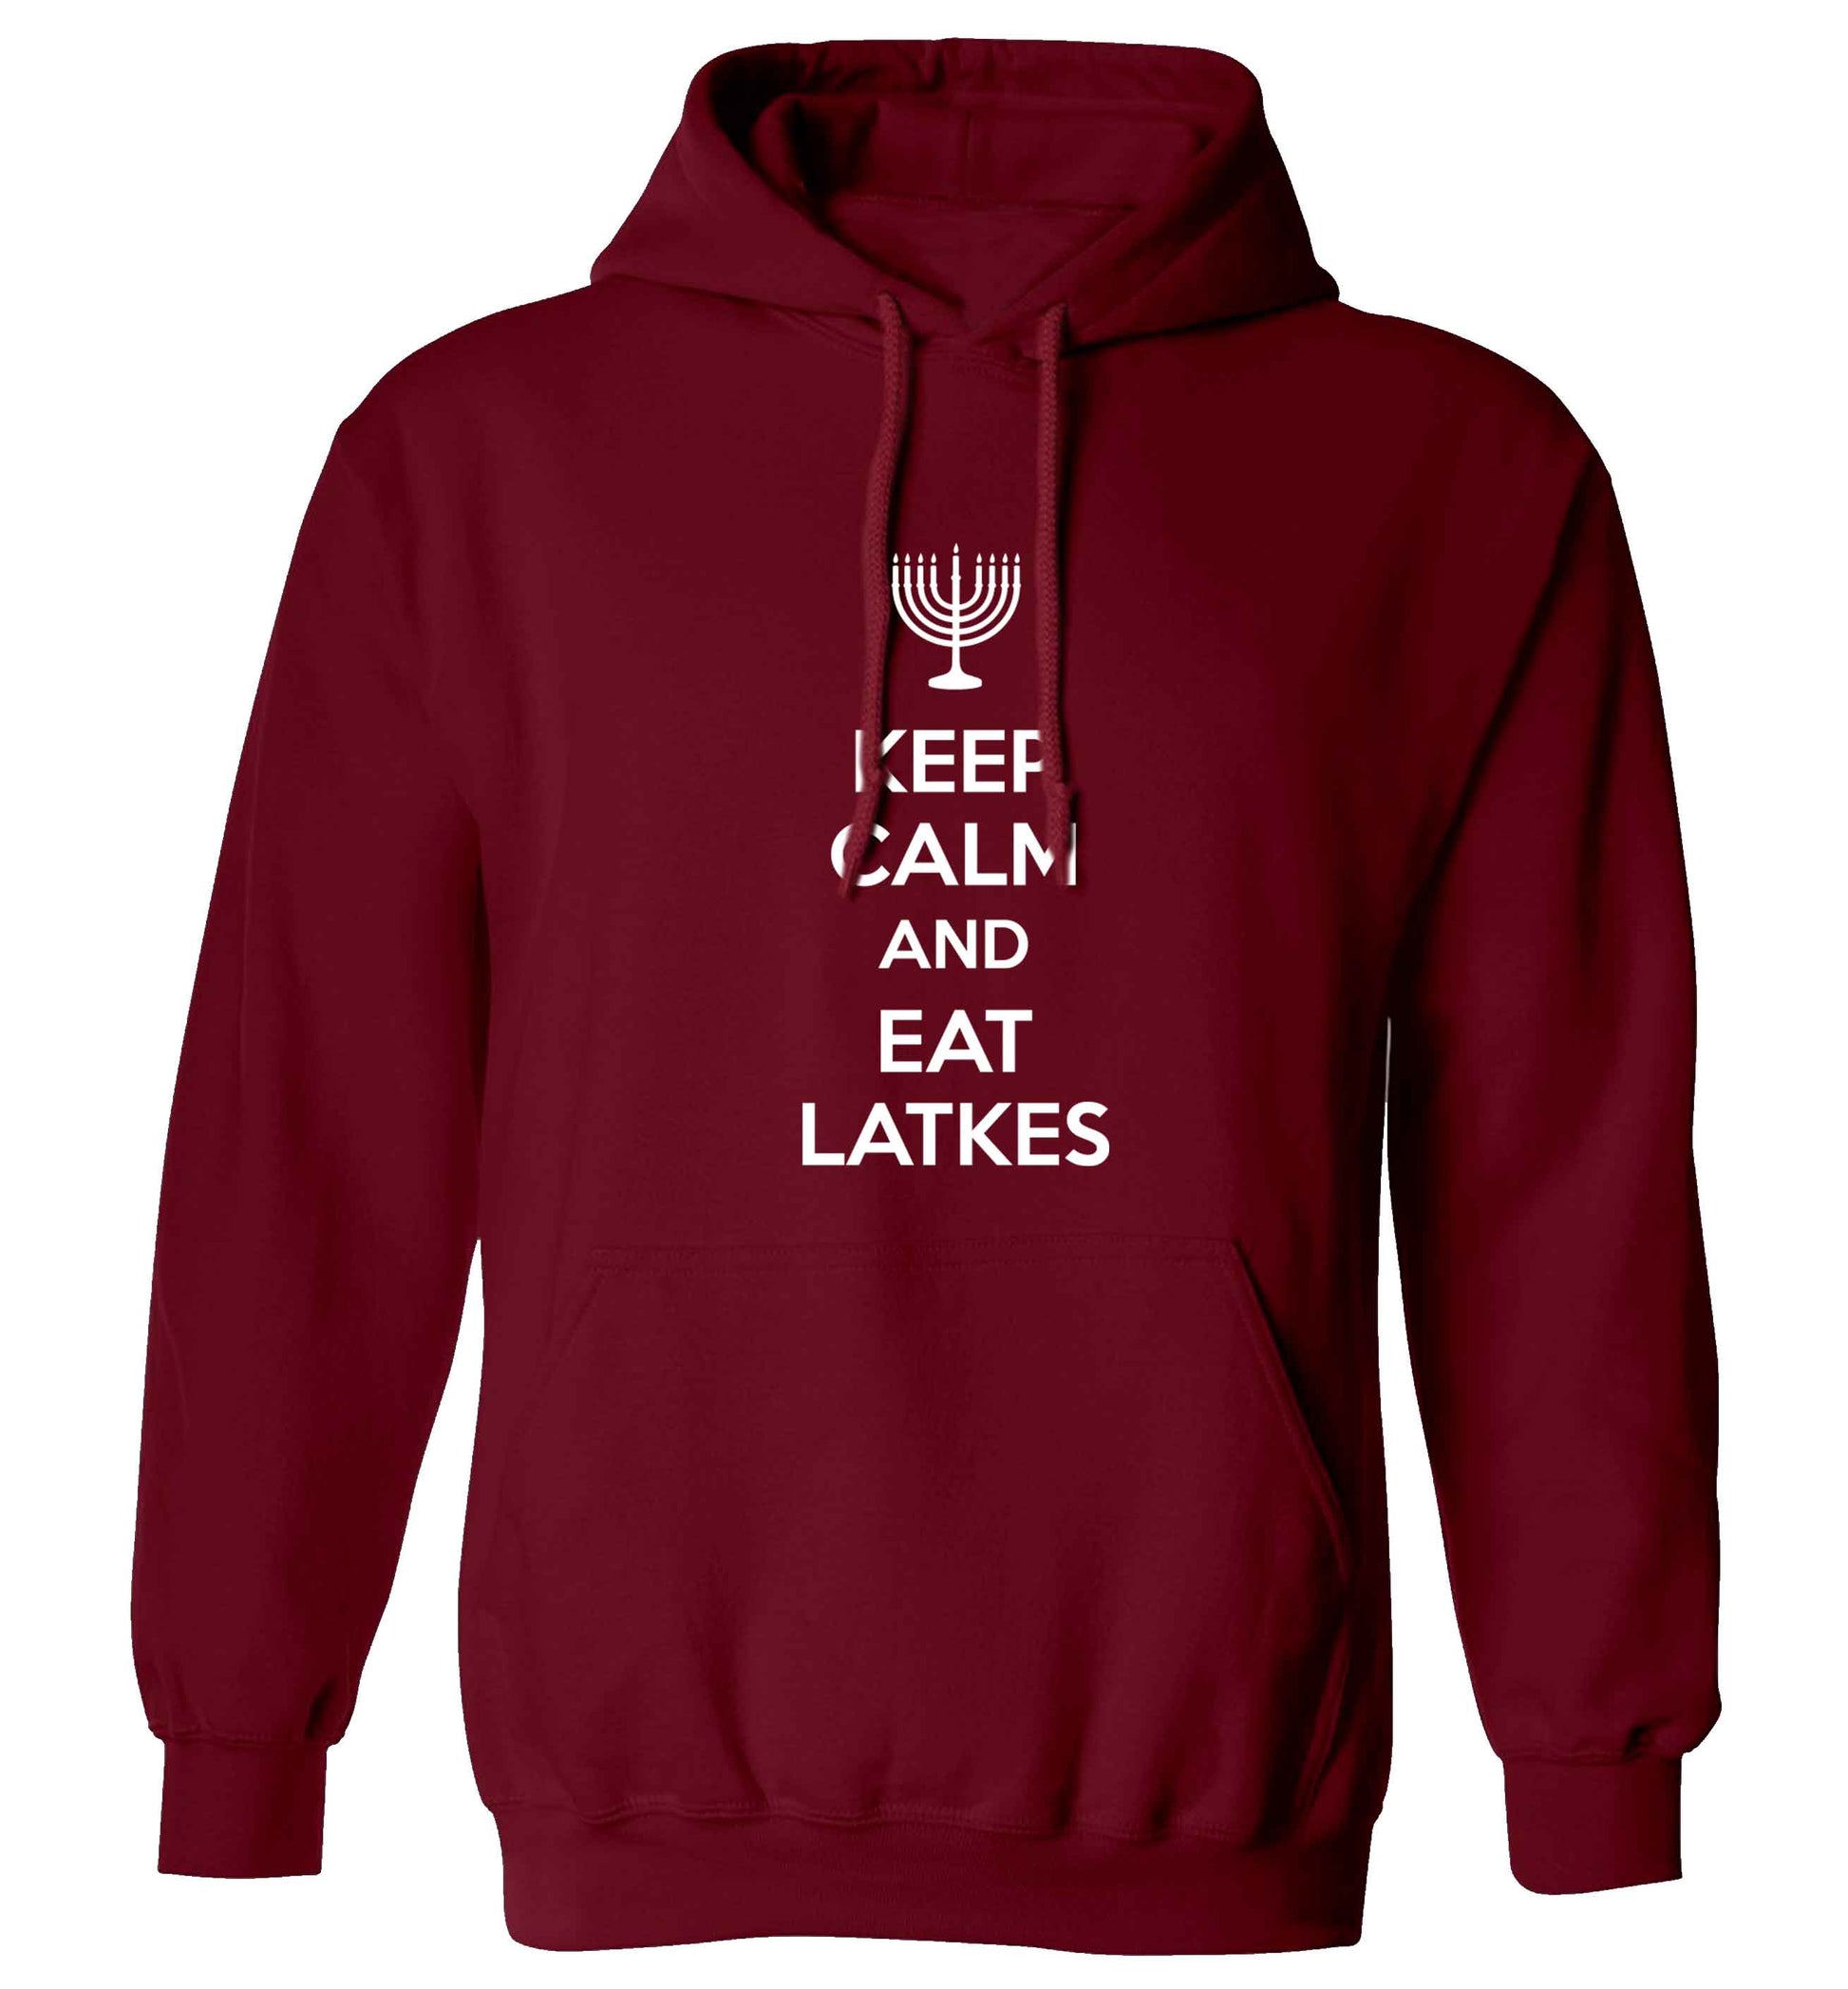 Keep calm and eat latkes adults unisex maroon hoodie 2XL